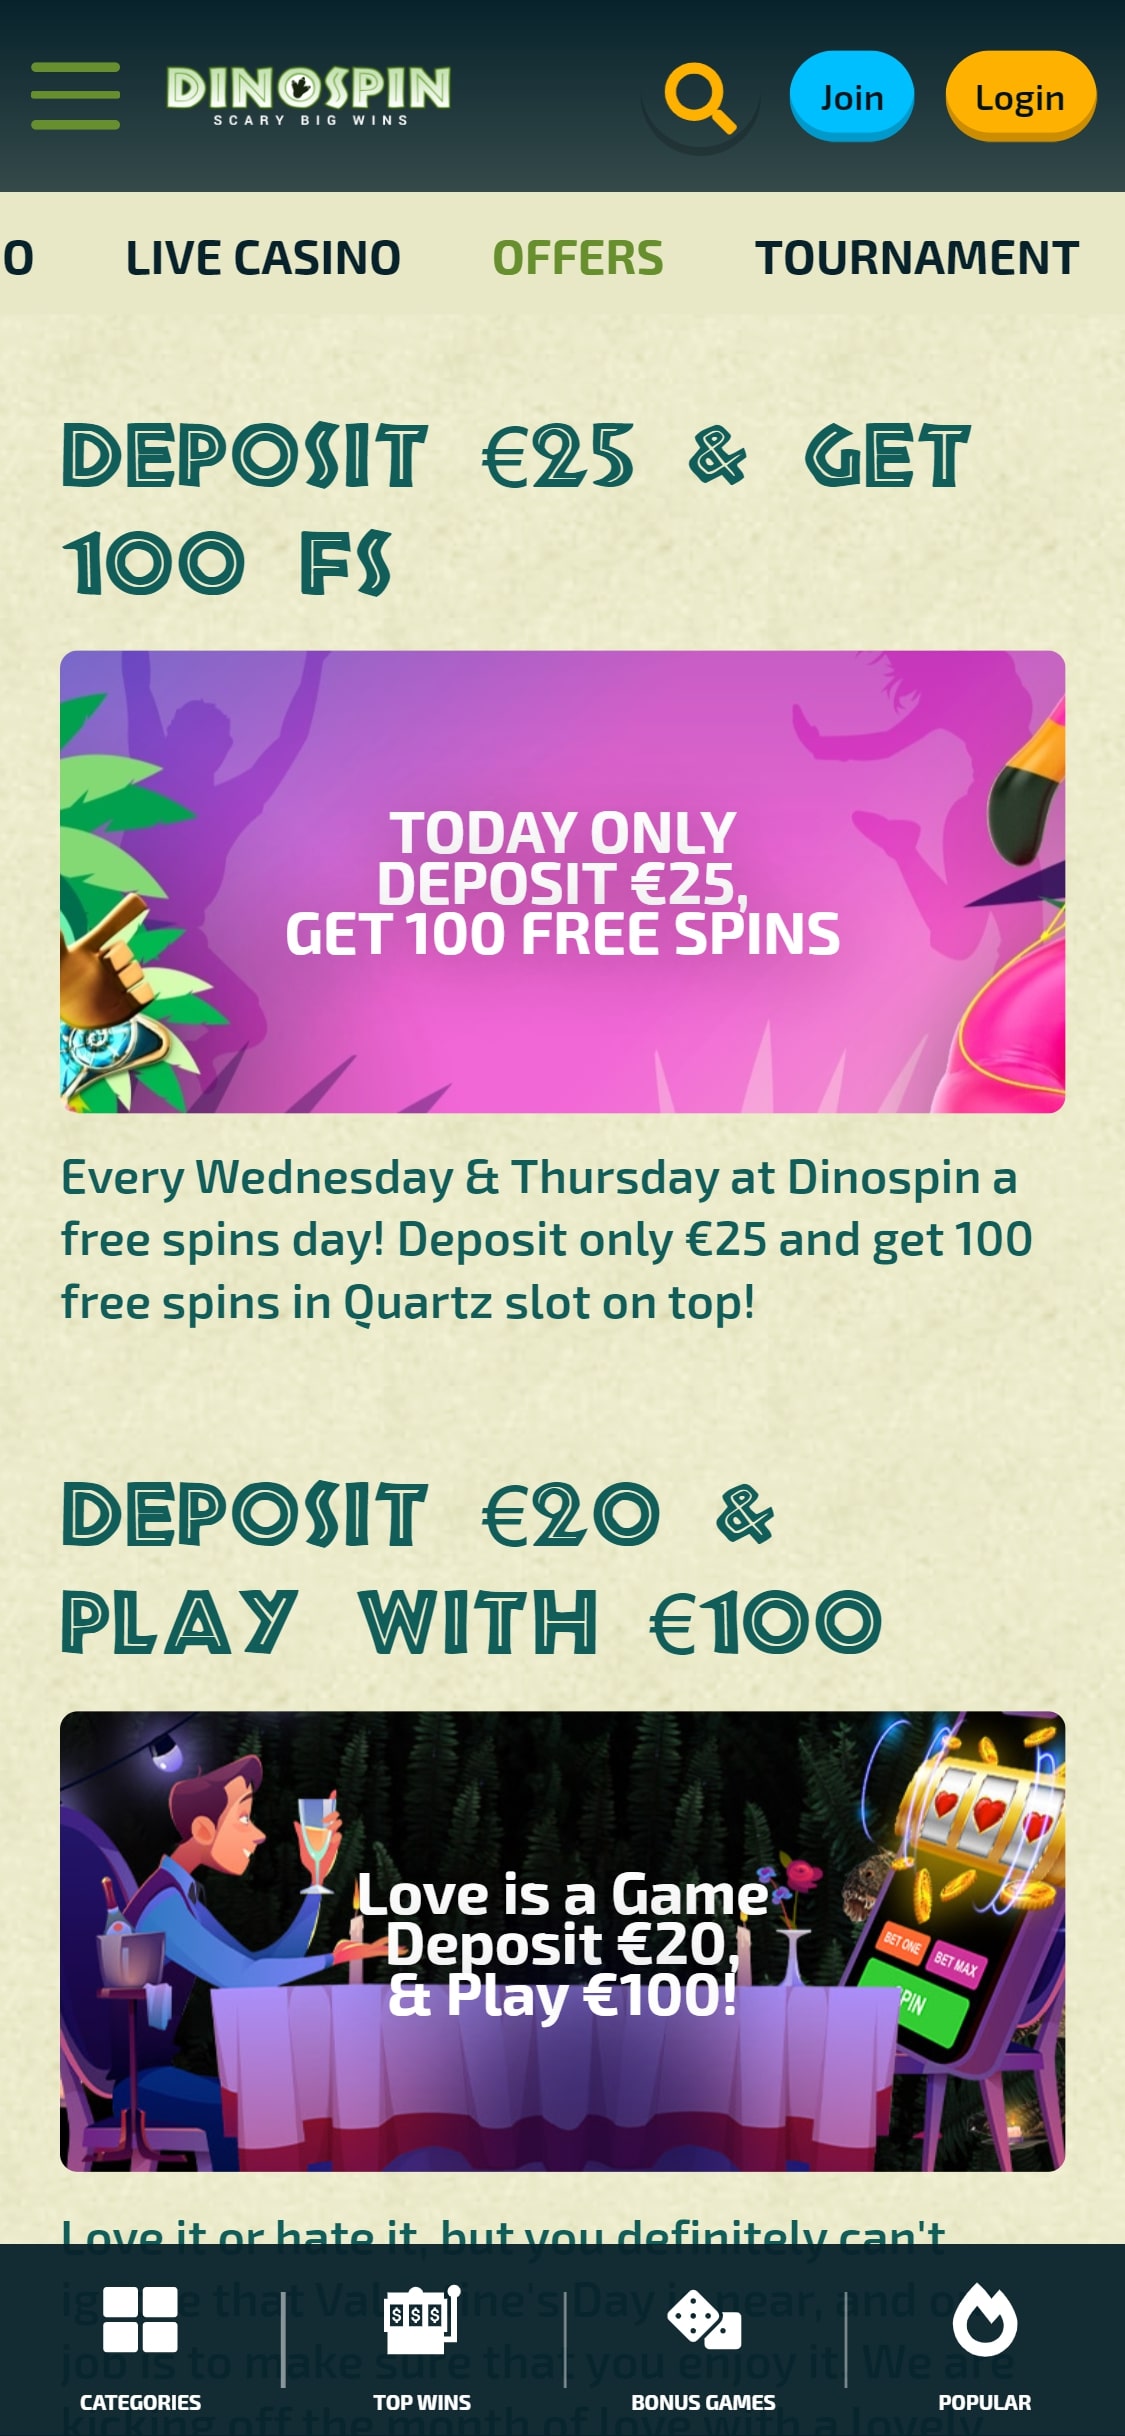 DinoSpin Casino Mobile No Deposit Bonus Review